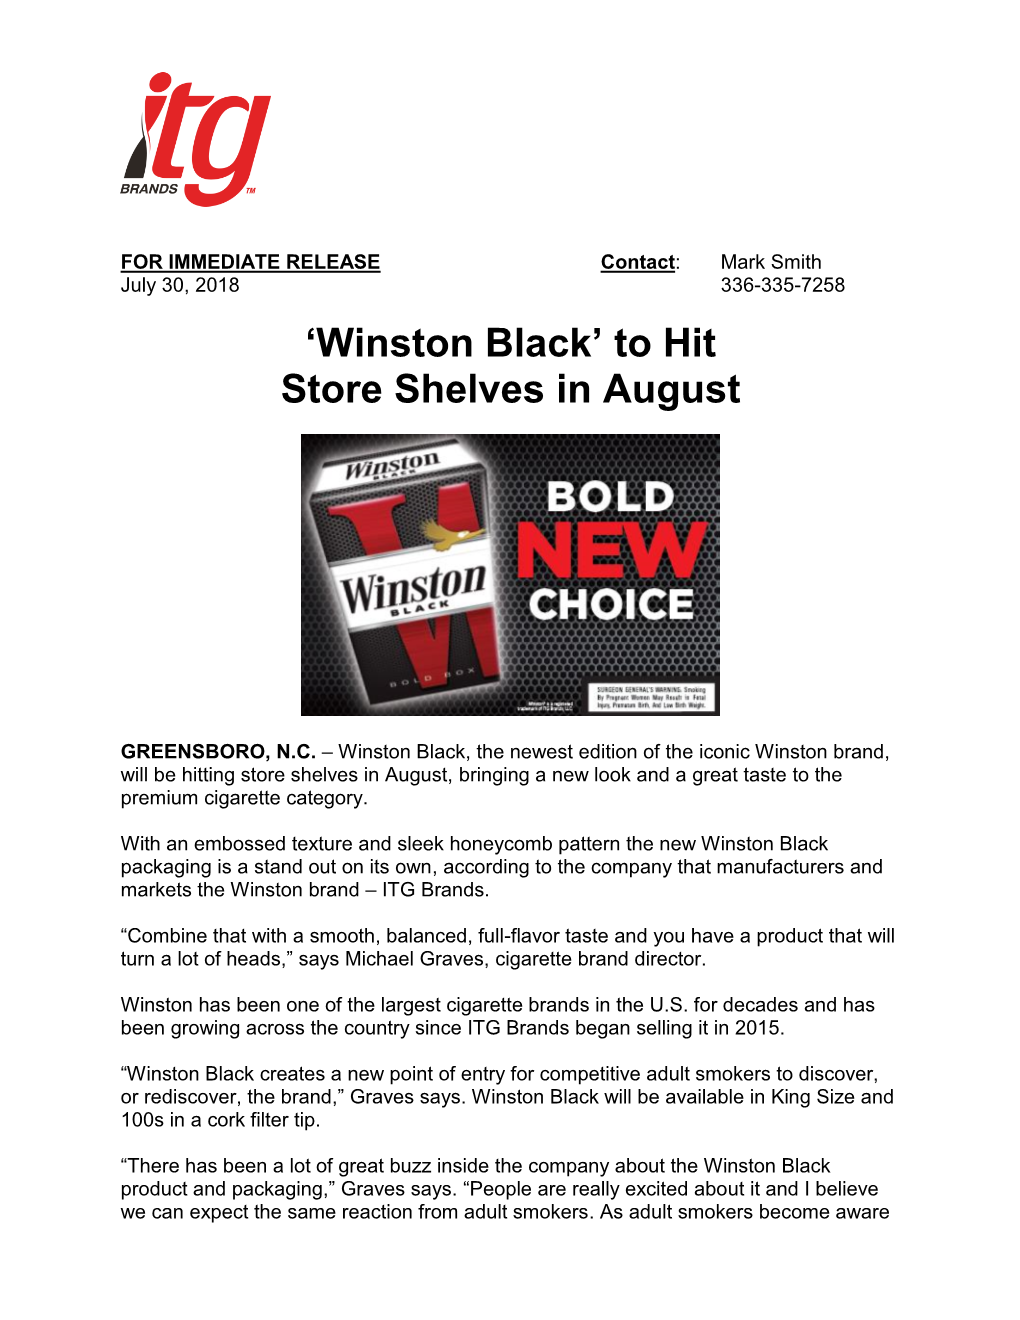 'Winston Black' to Hit Store Shelves in August